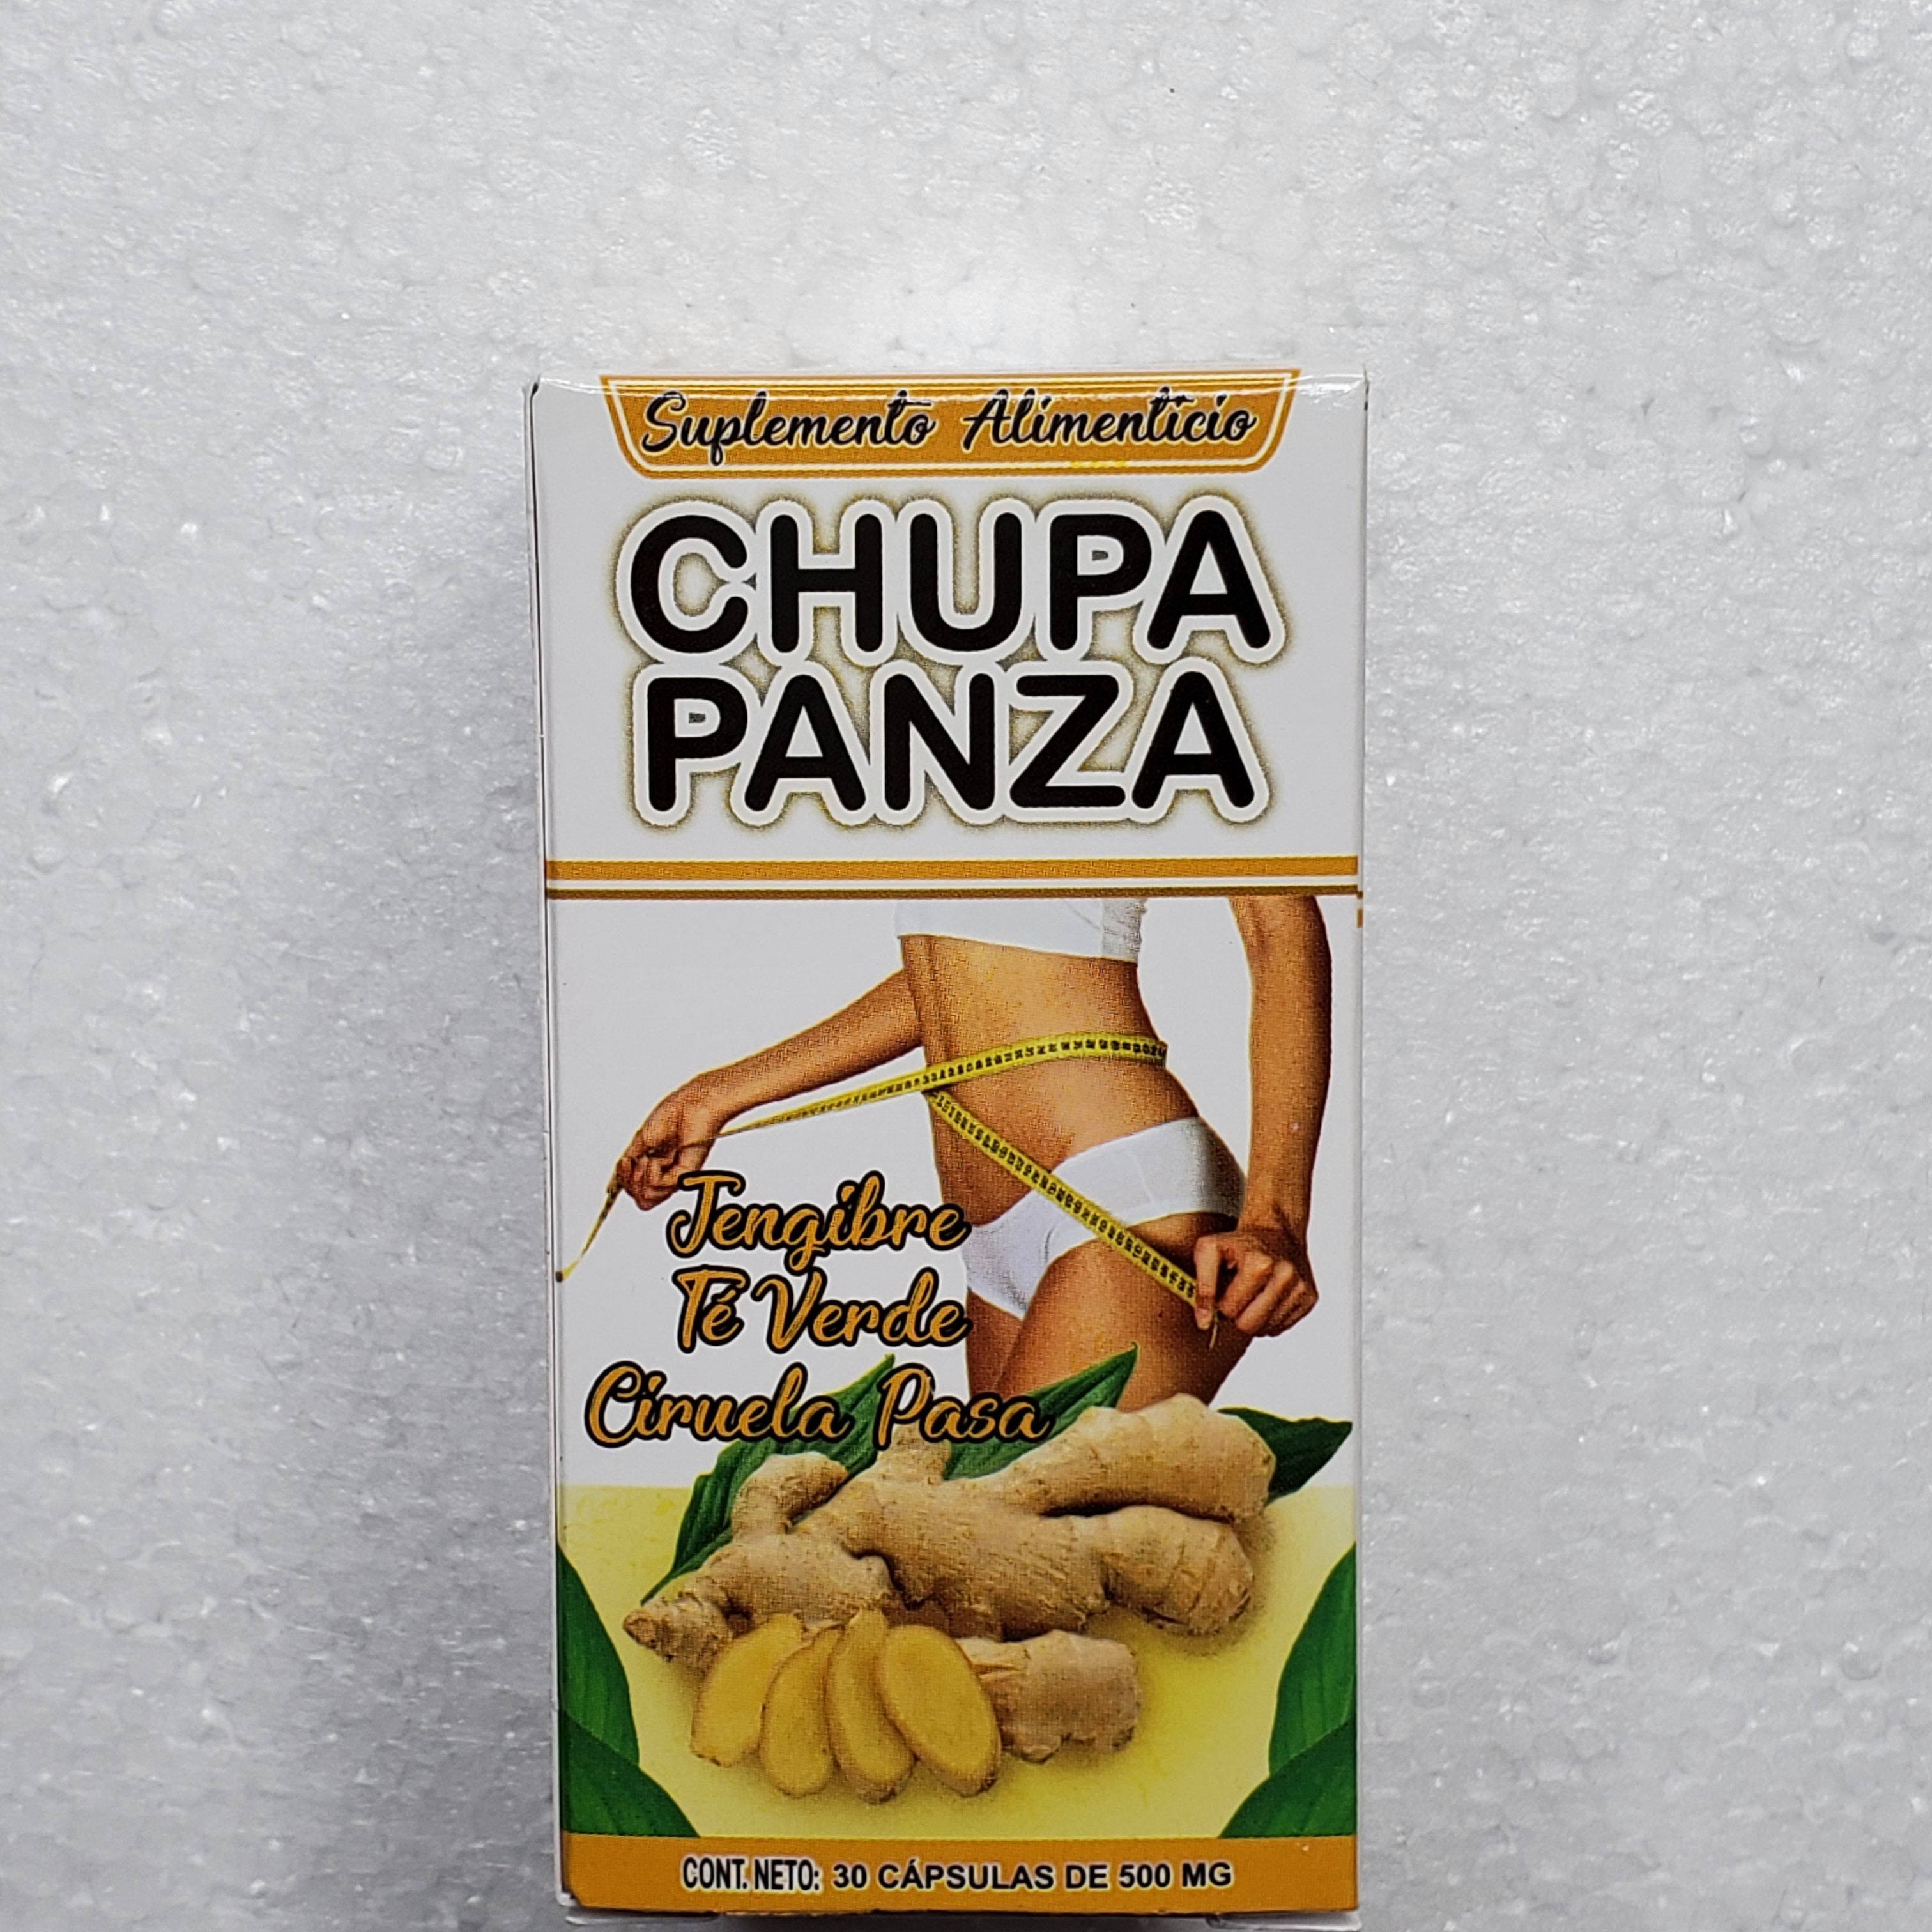 CHUPA PANZA – Gali Company